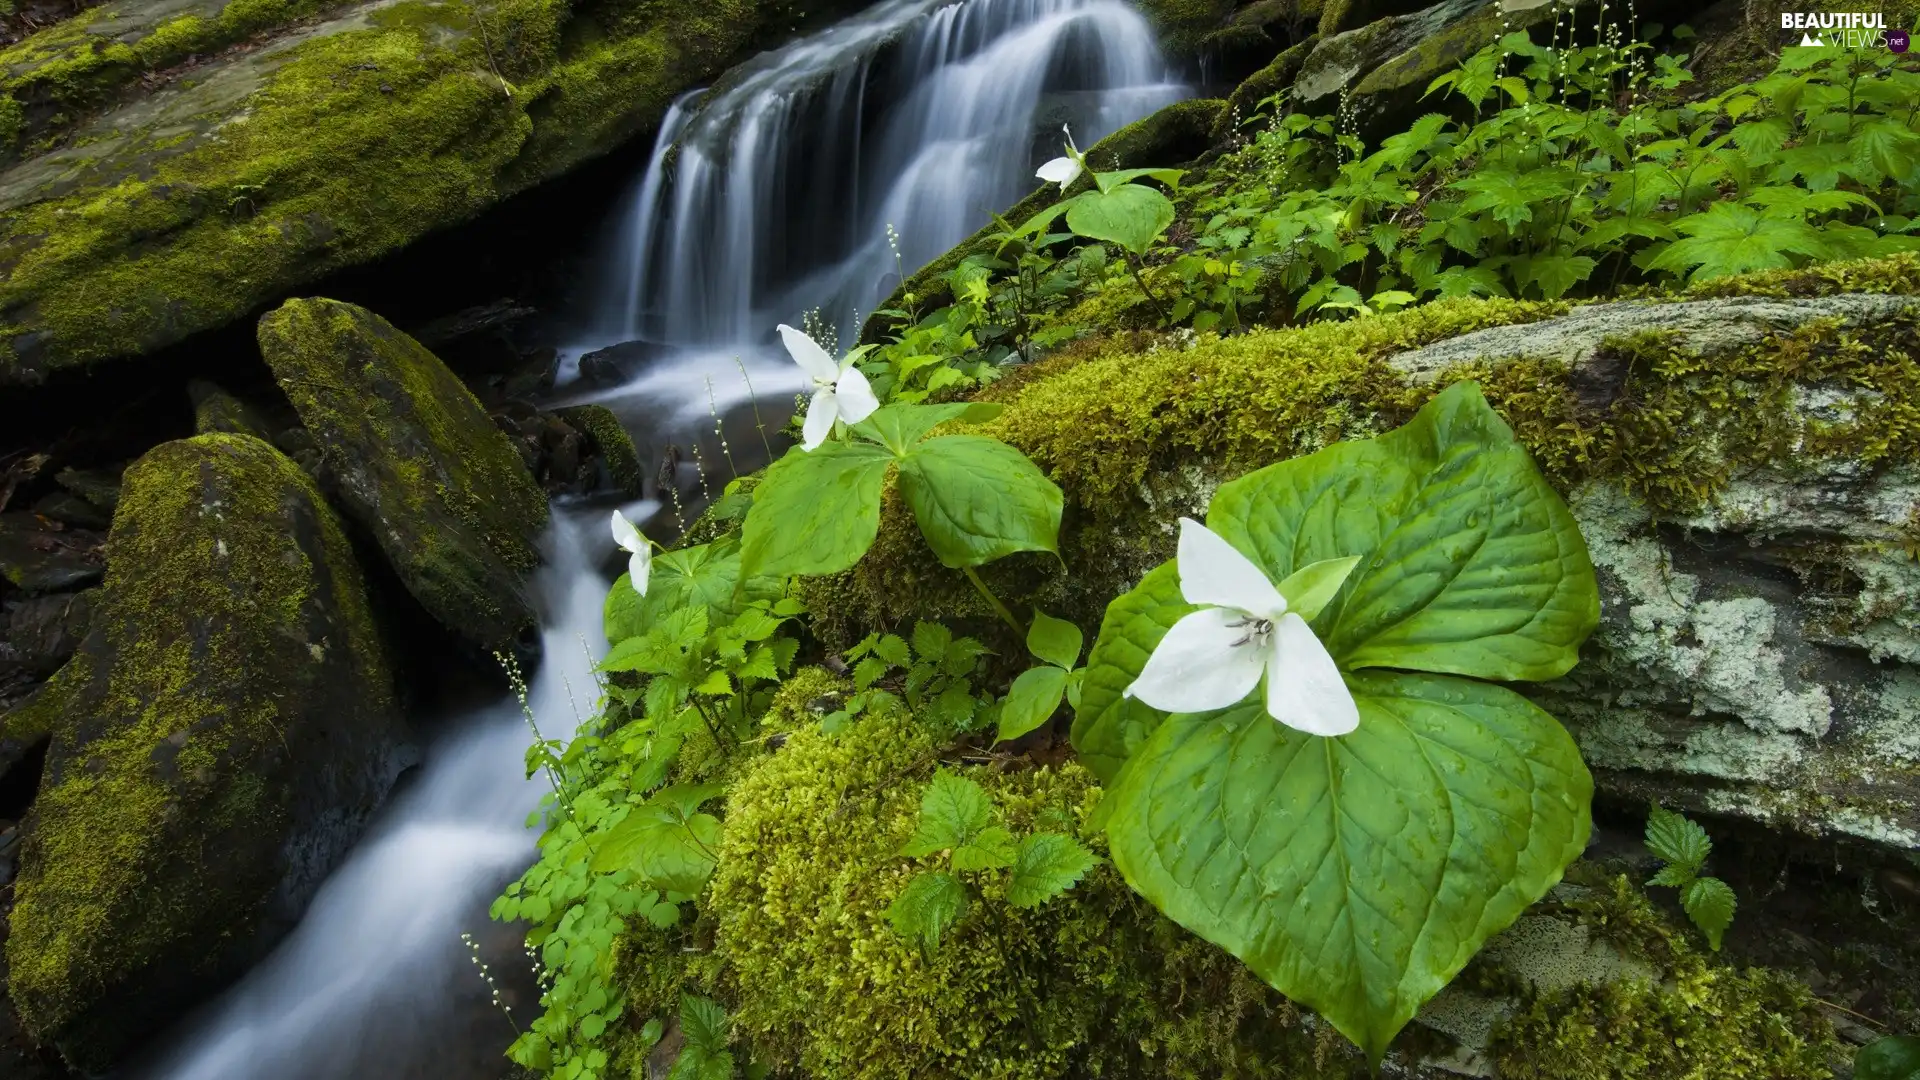 mountainous, Flowers, Moss, stream